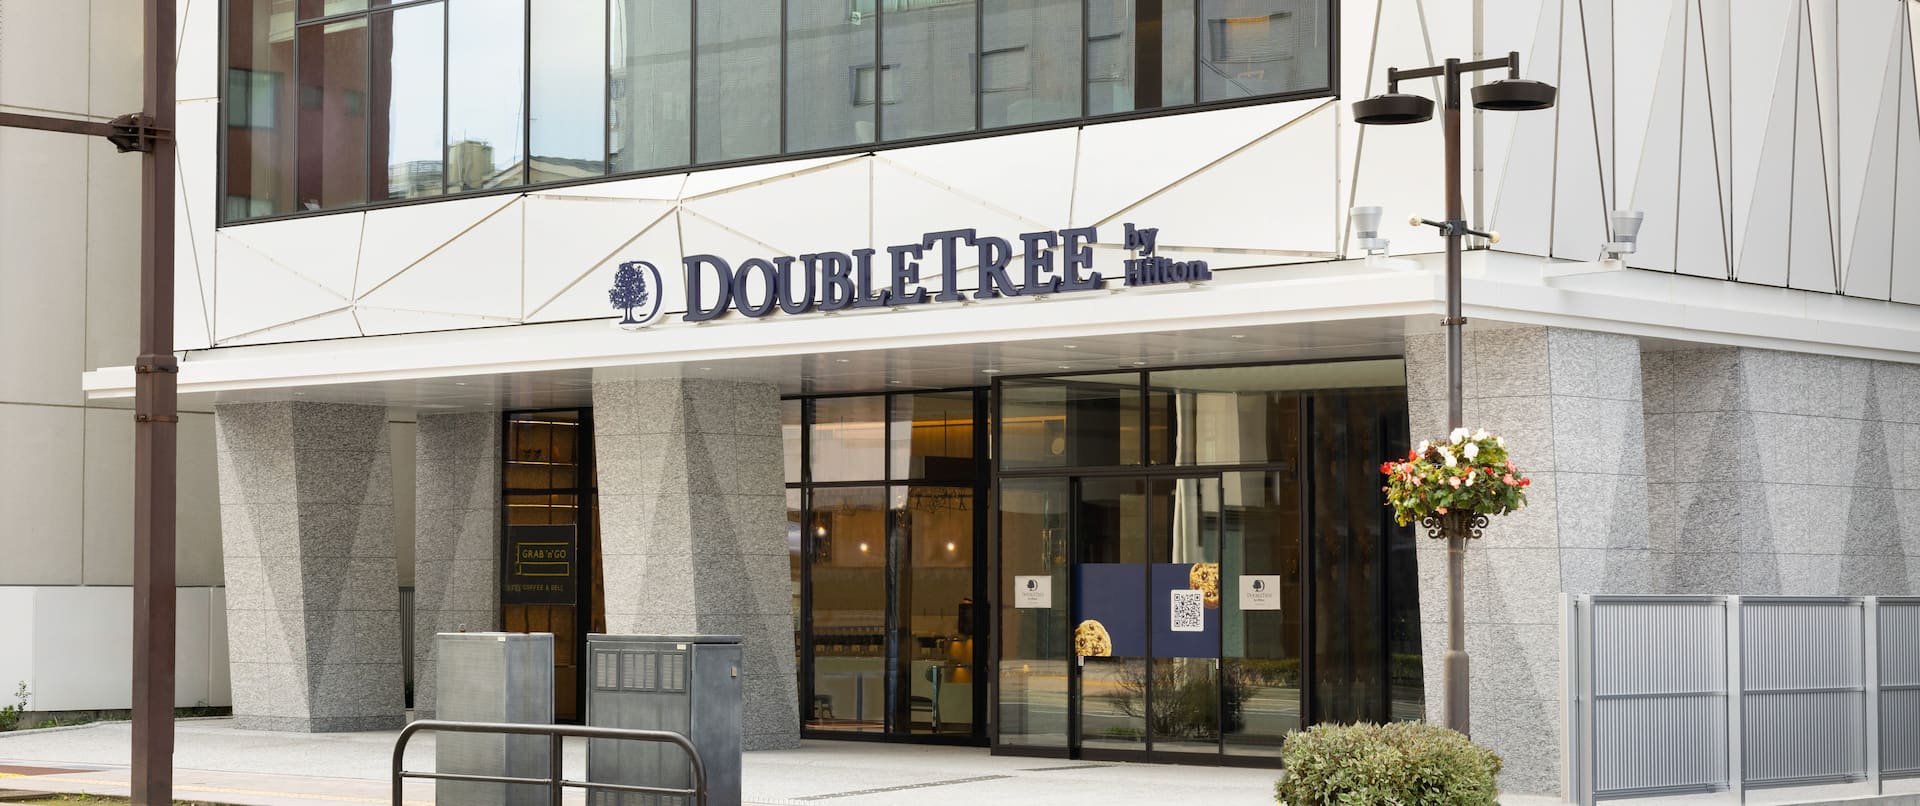 DoubleTree Hotel Exterior